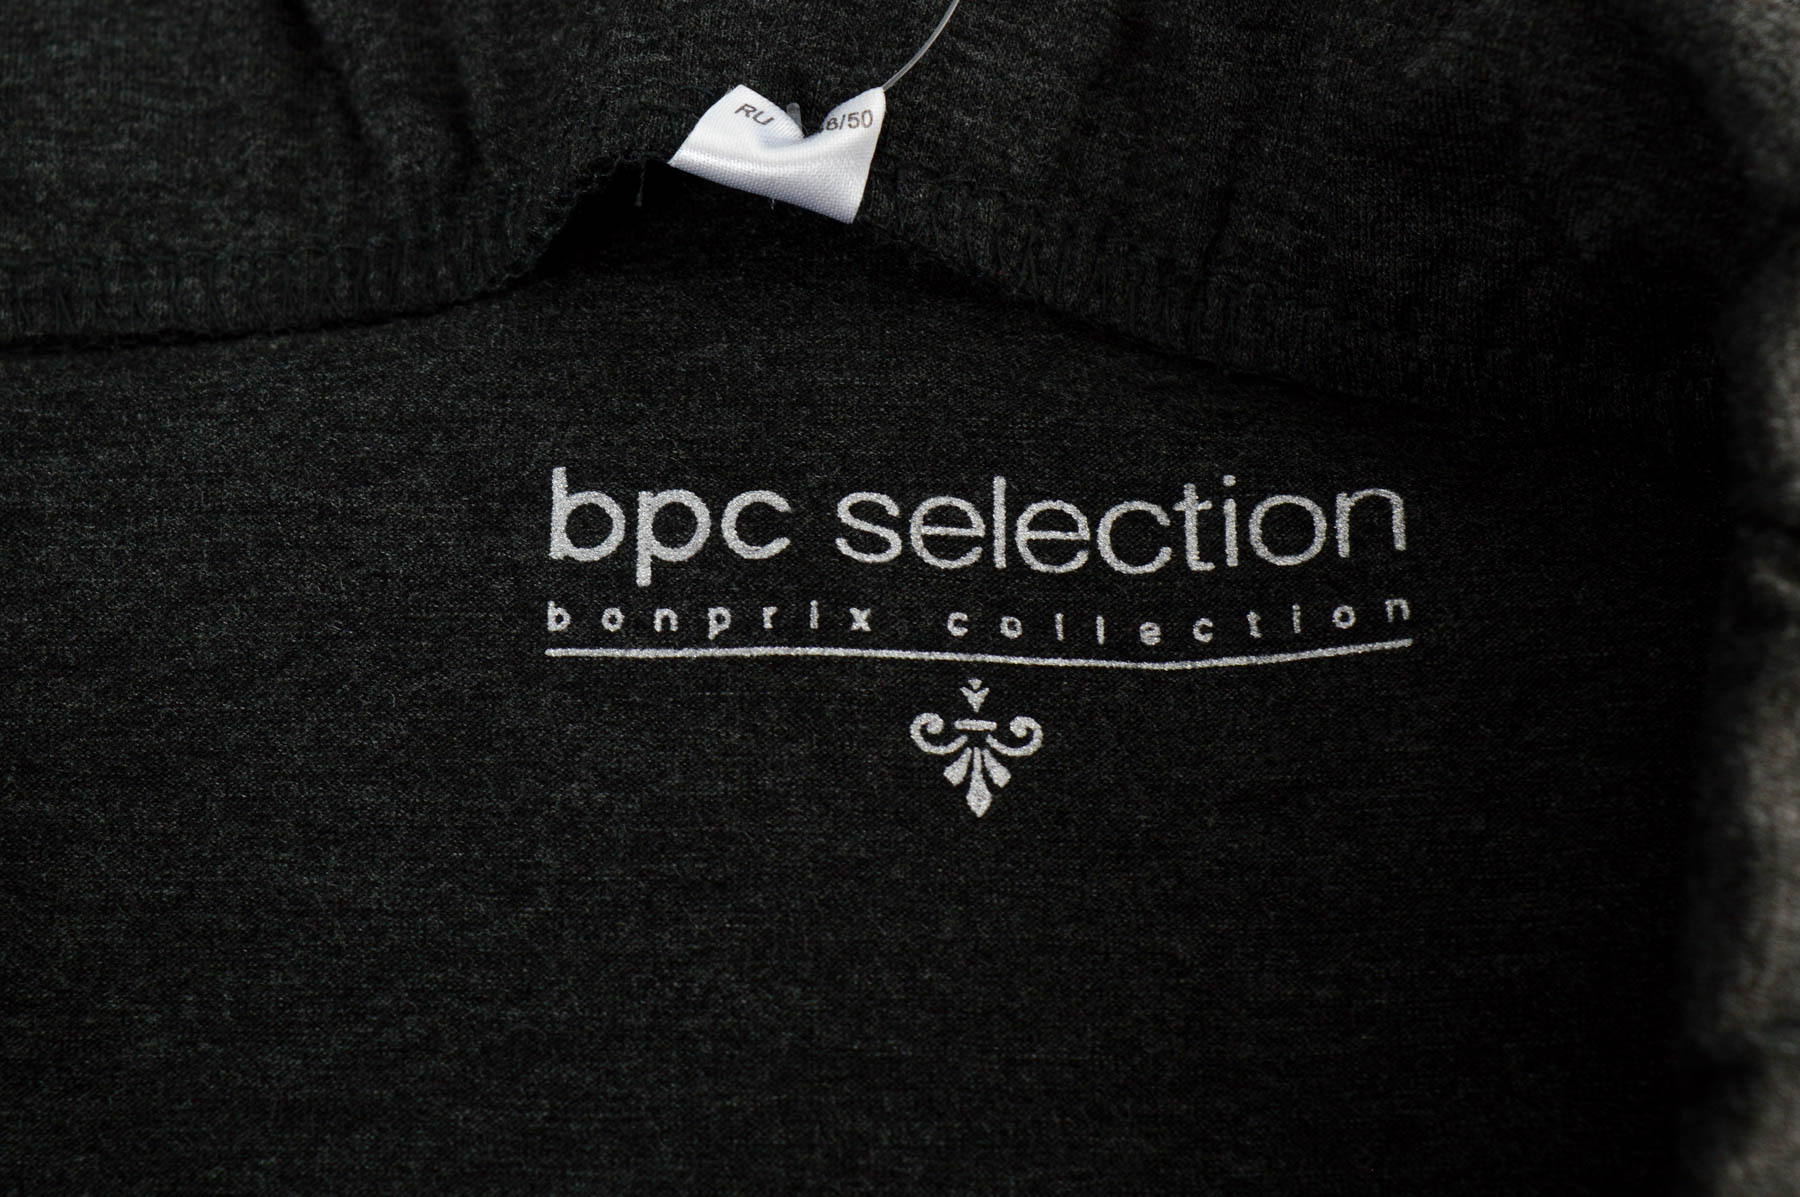 Пола - Bpc selection bonprix collection - 2